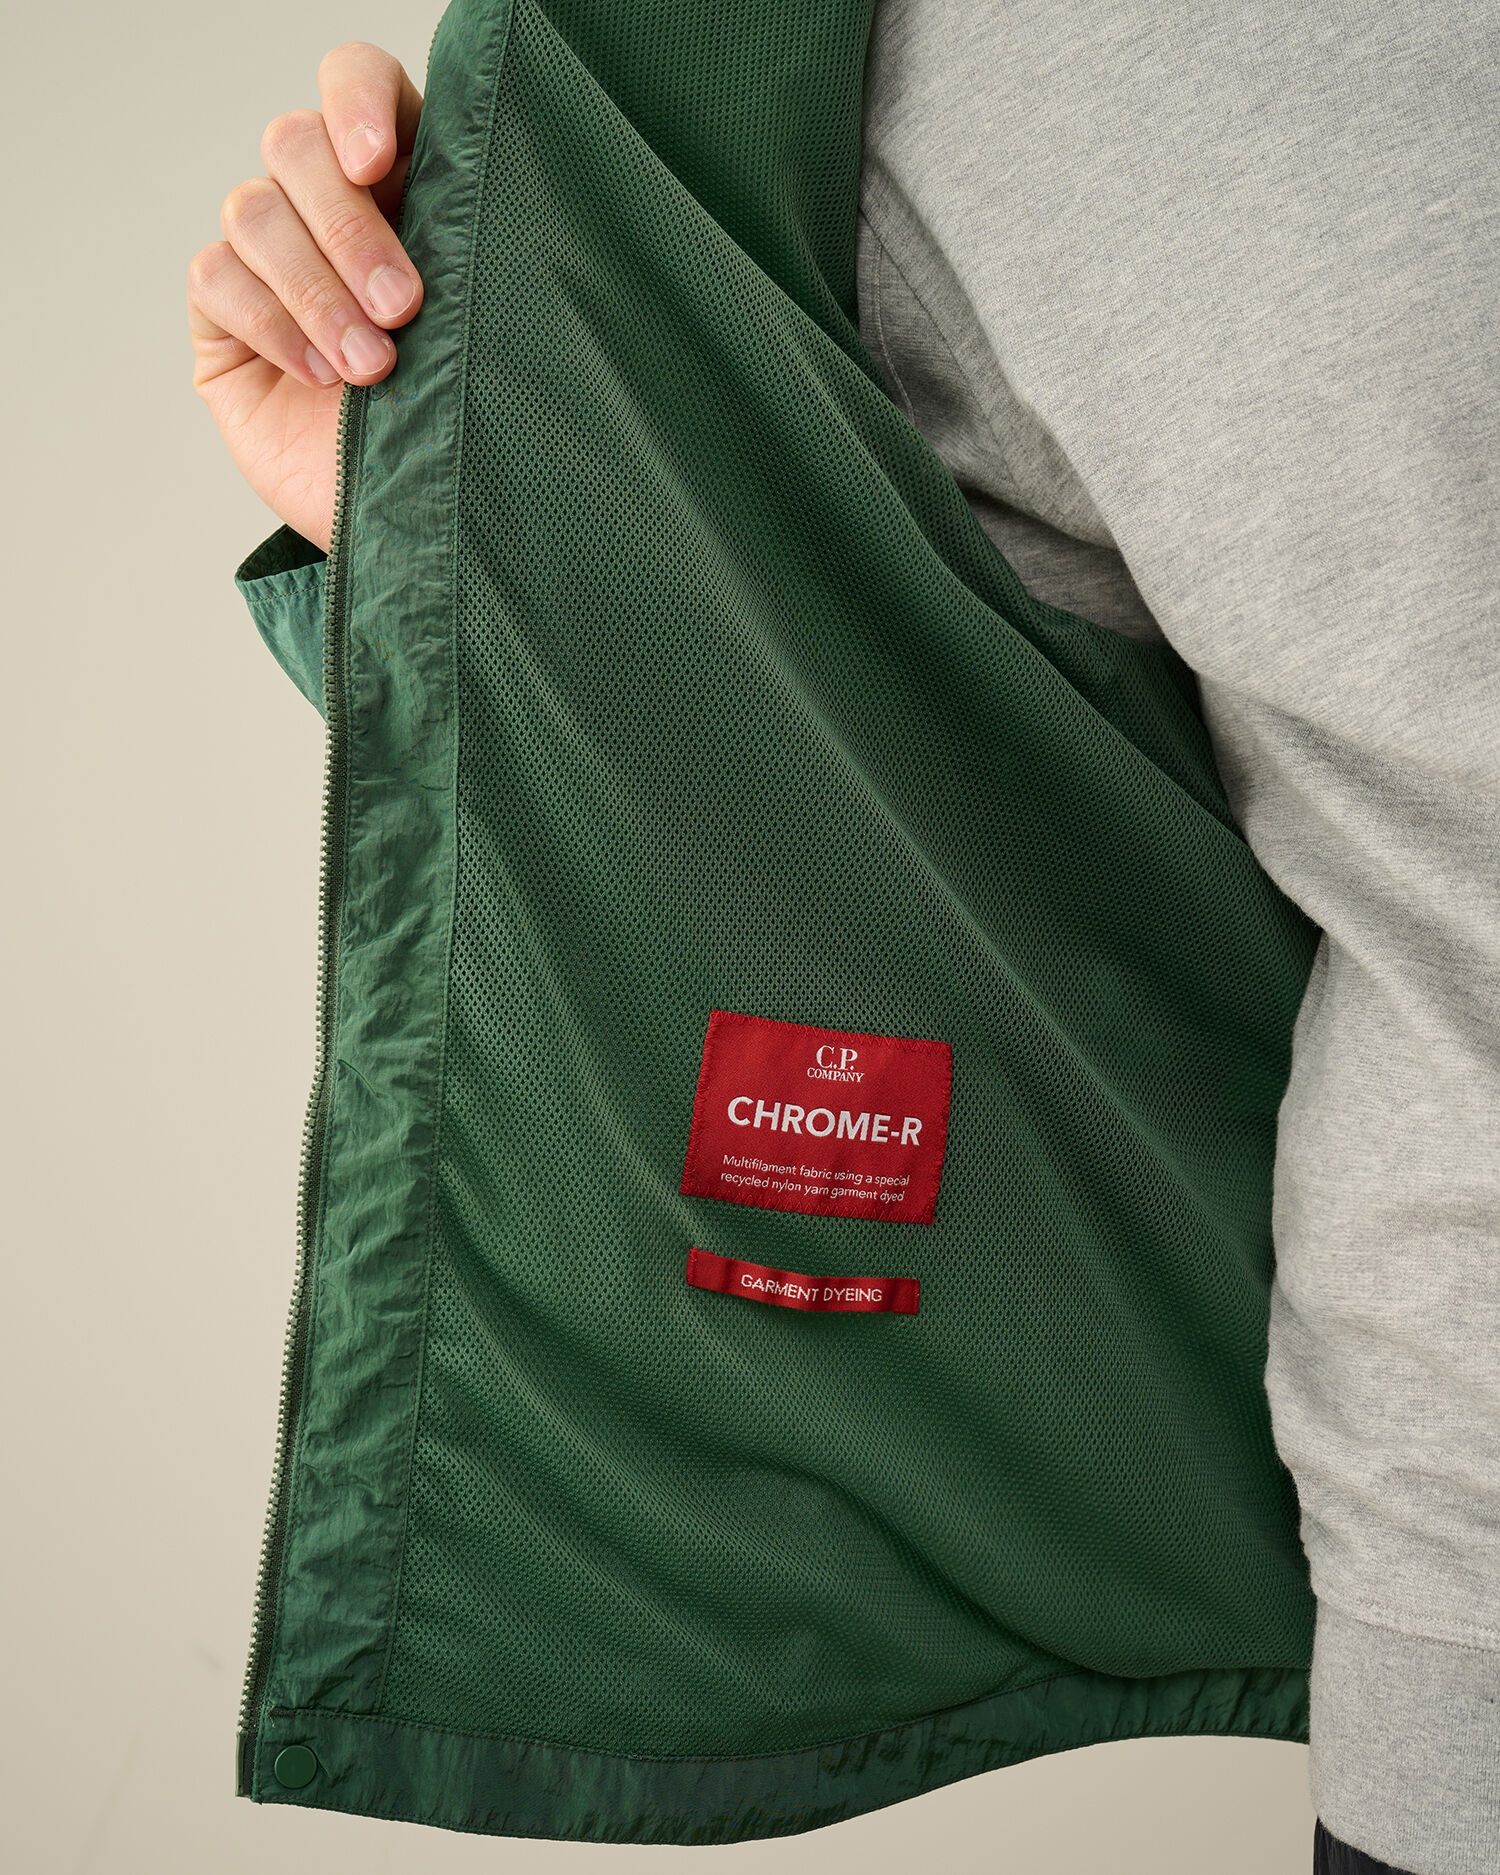 Chrome-R Pocket Overshirt - 6